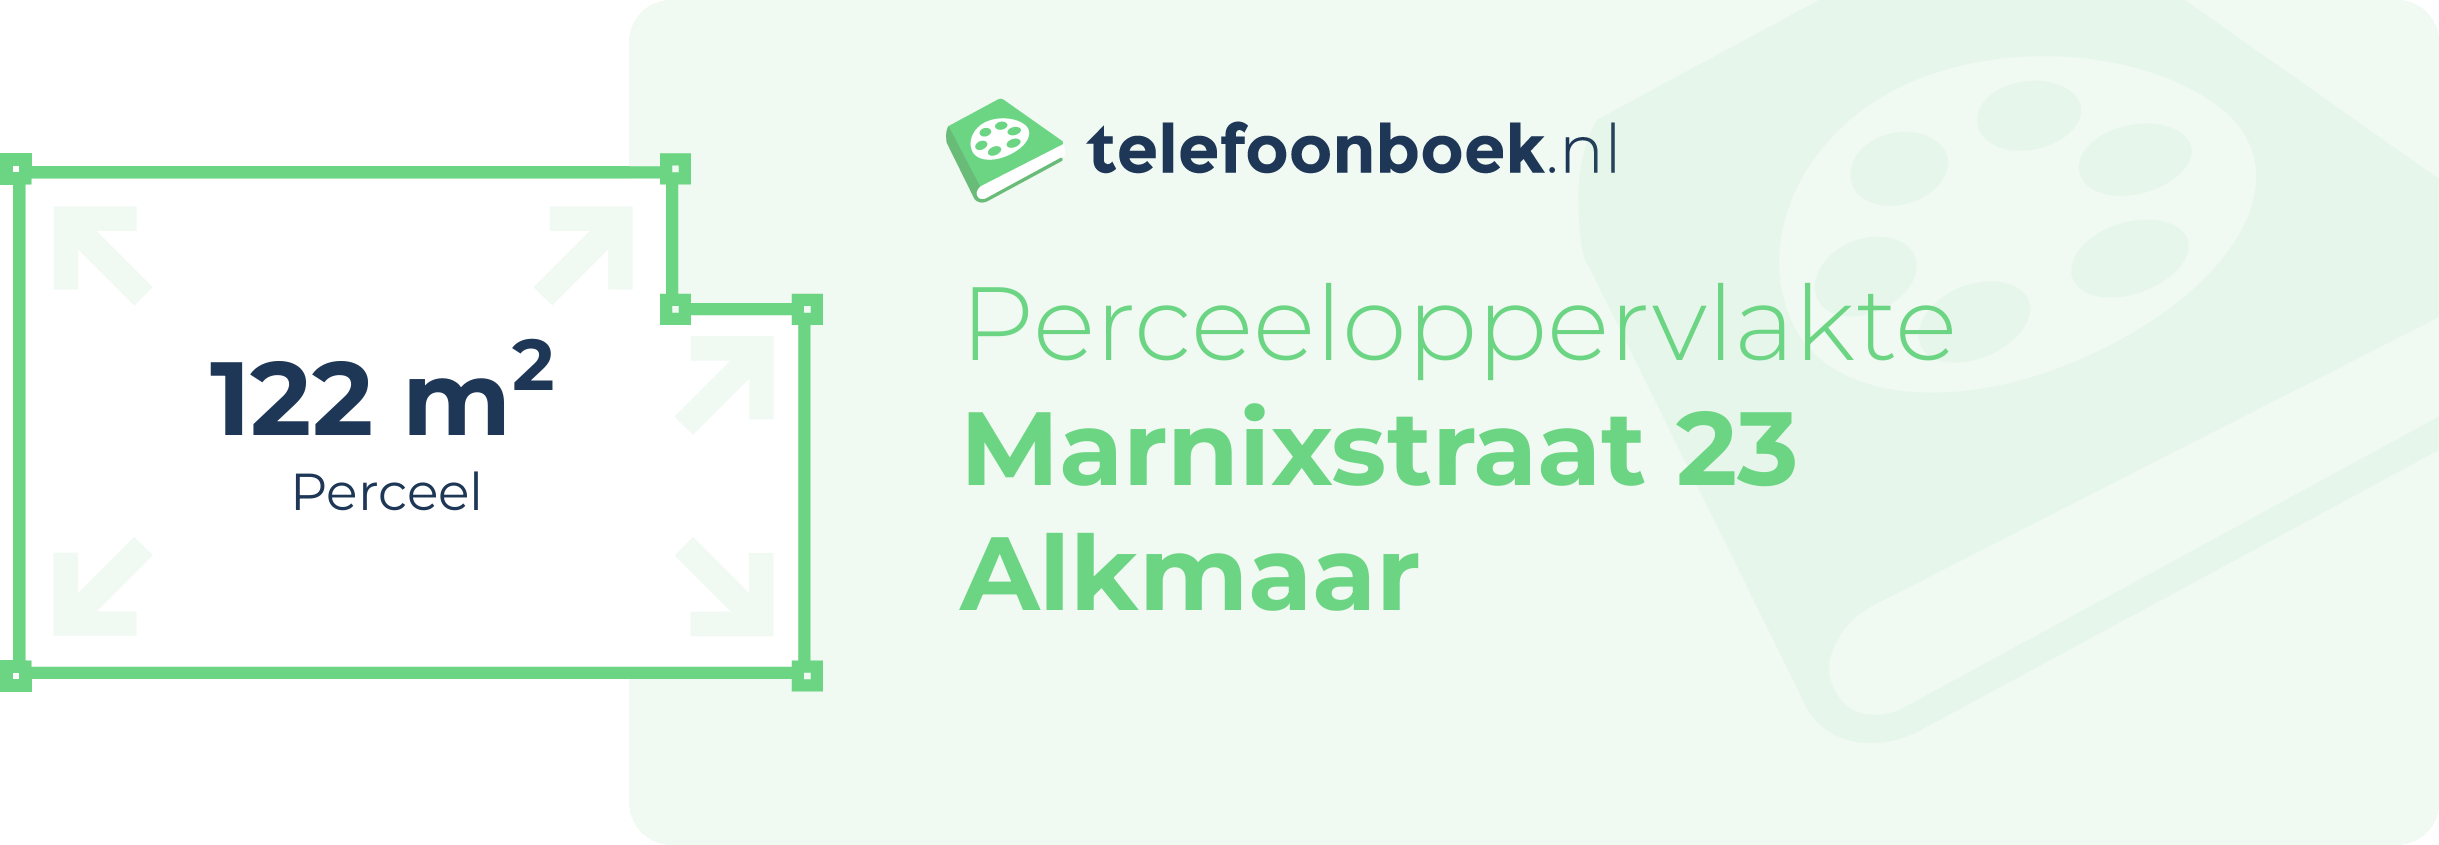 Perceeloppervlakte Marnixstraat 23 Alkmaar